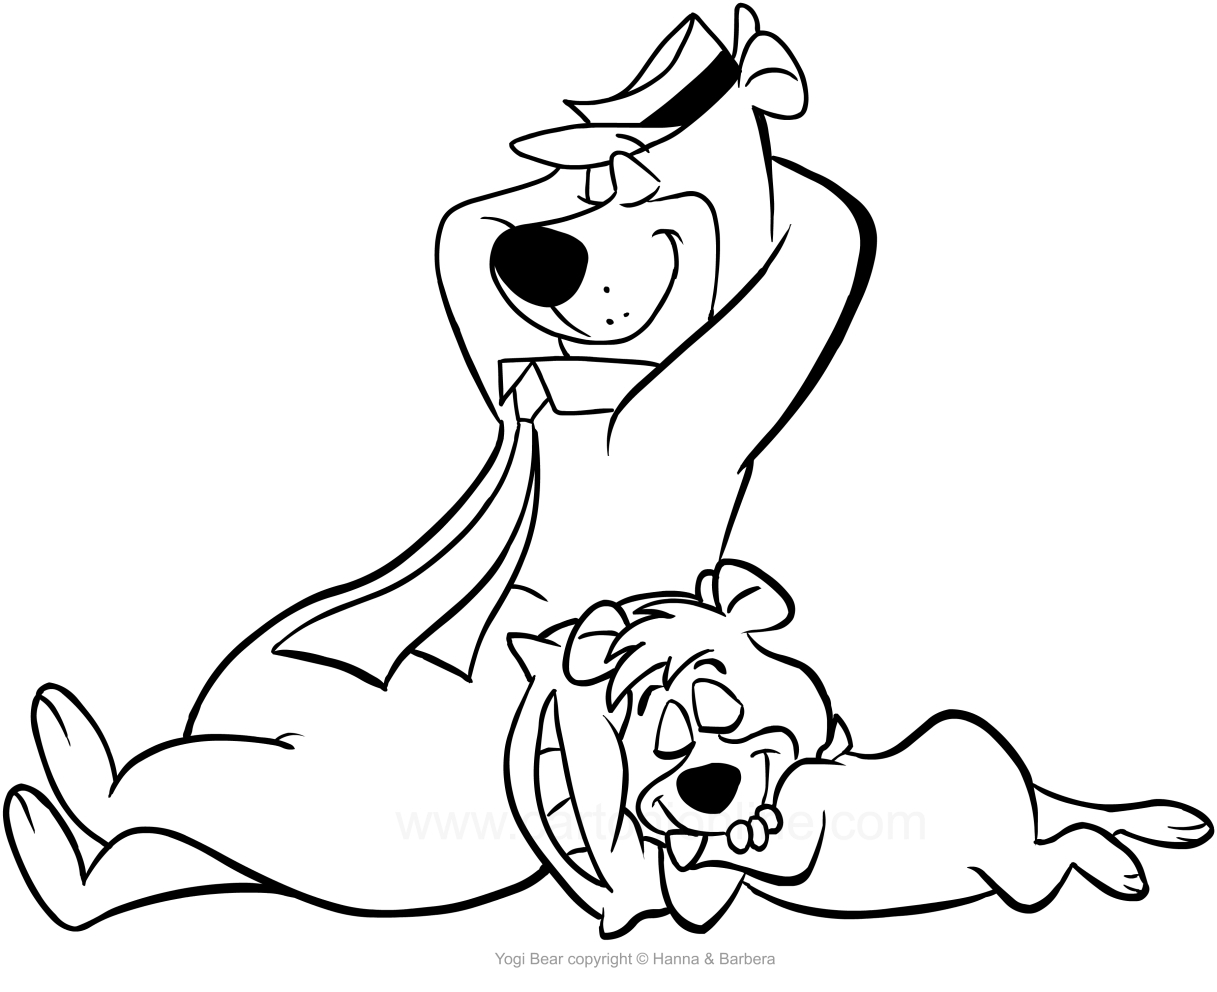 Yogi Bear Coloring Page Drawing The Yogi Bear And Boo Boo Sleeping Coloring Page